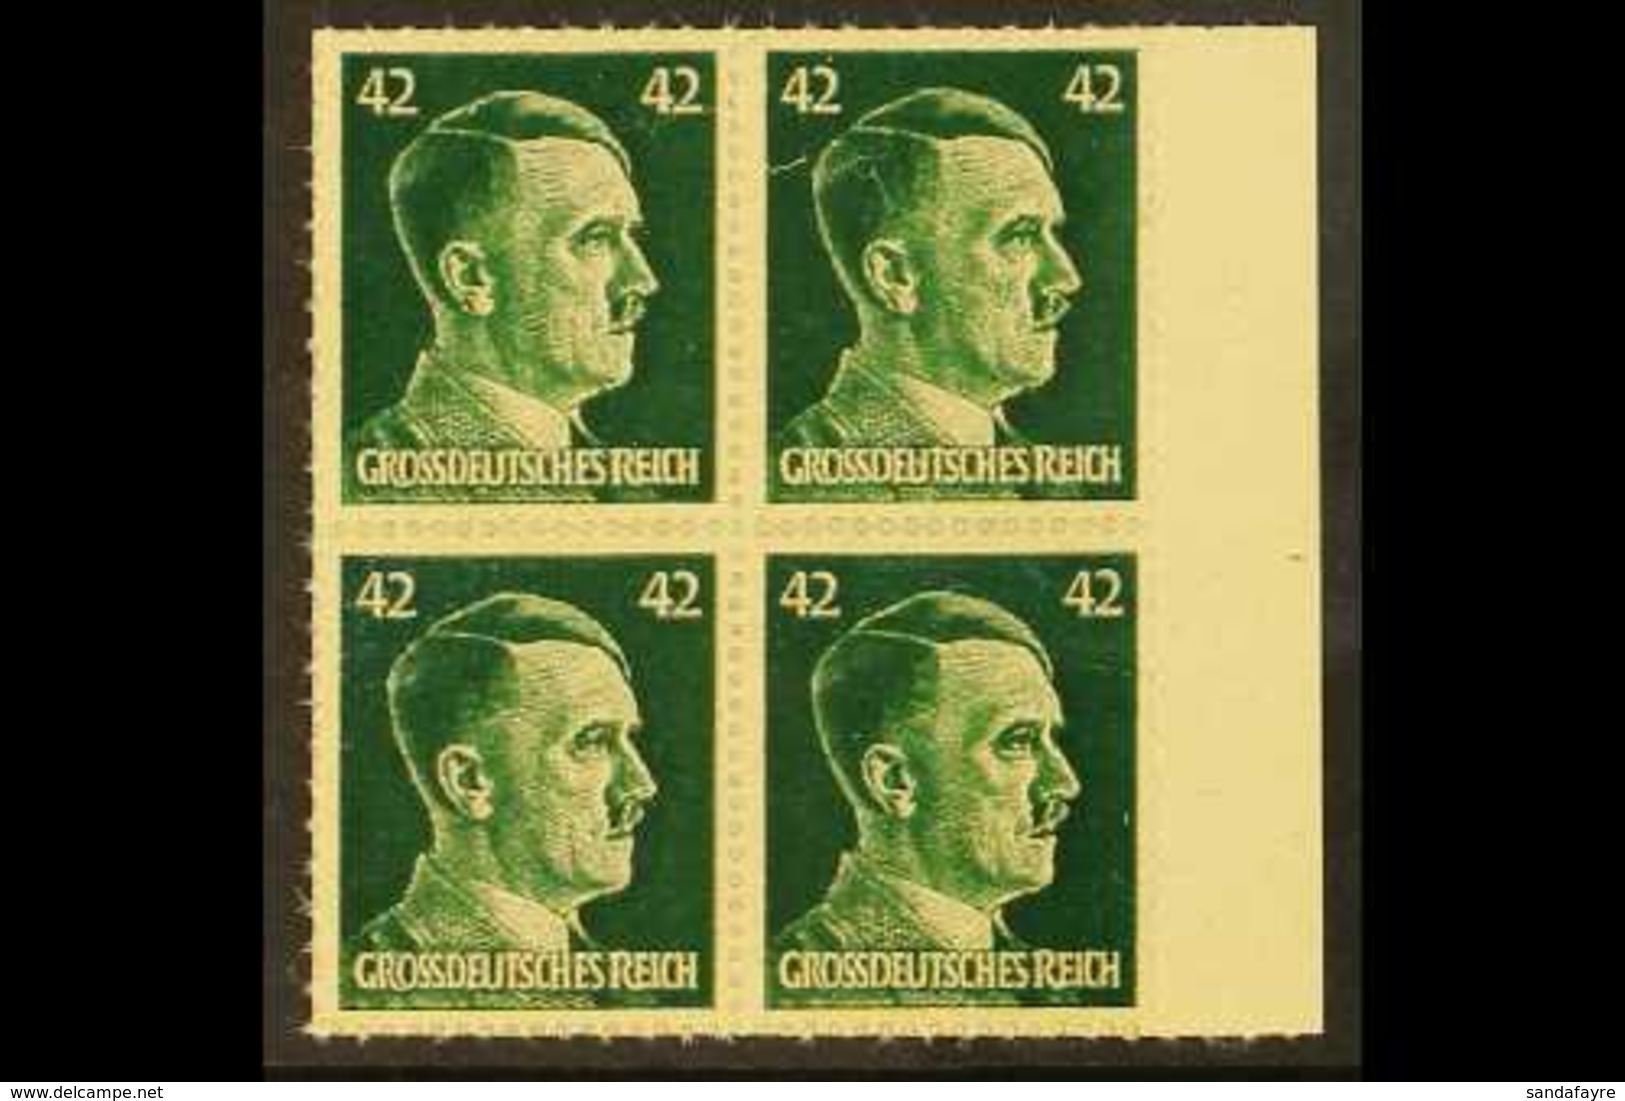 FILM MEMORABILIA - STAMPS. 42pf Green Grossdeutsches Reich Hitler Marginal Block Of 4 Reproduction Stamps Made Exclusive - Sin Clasificación